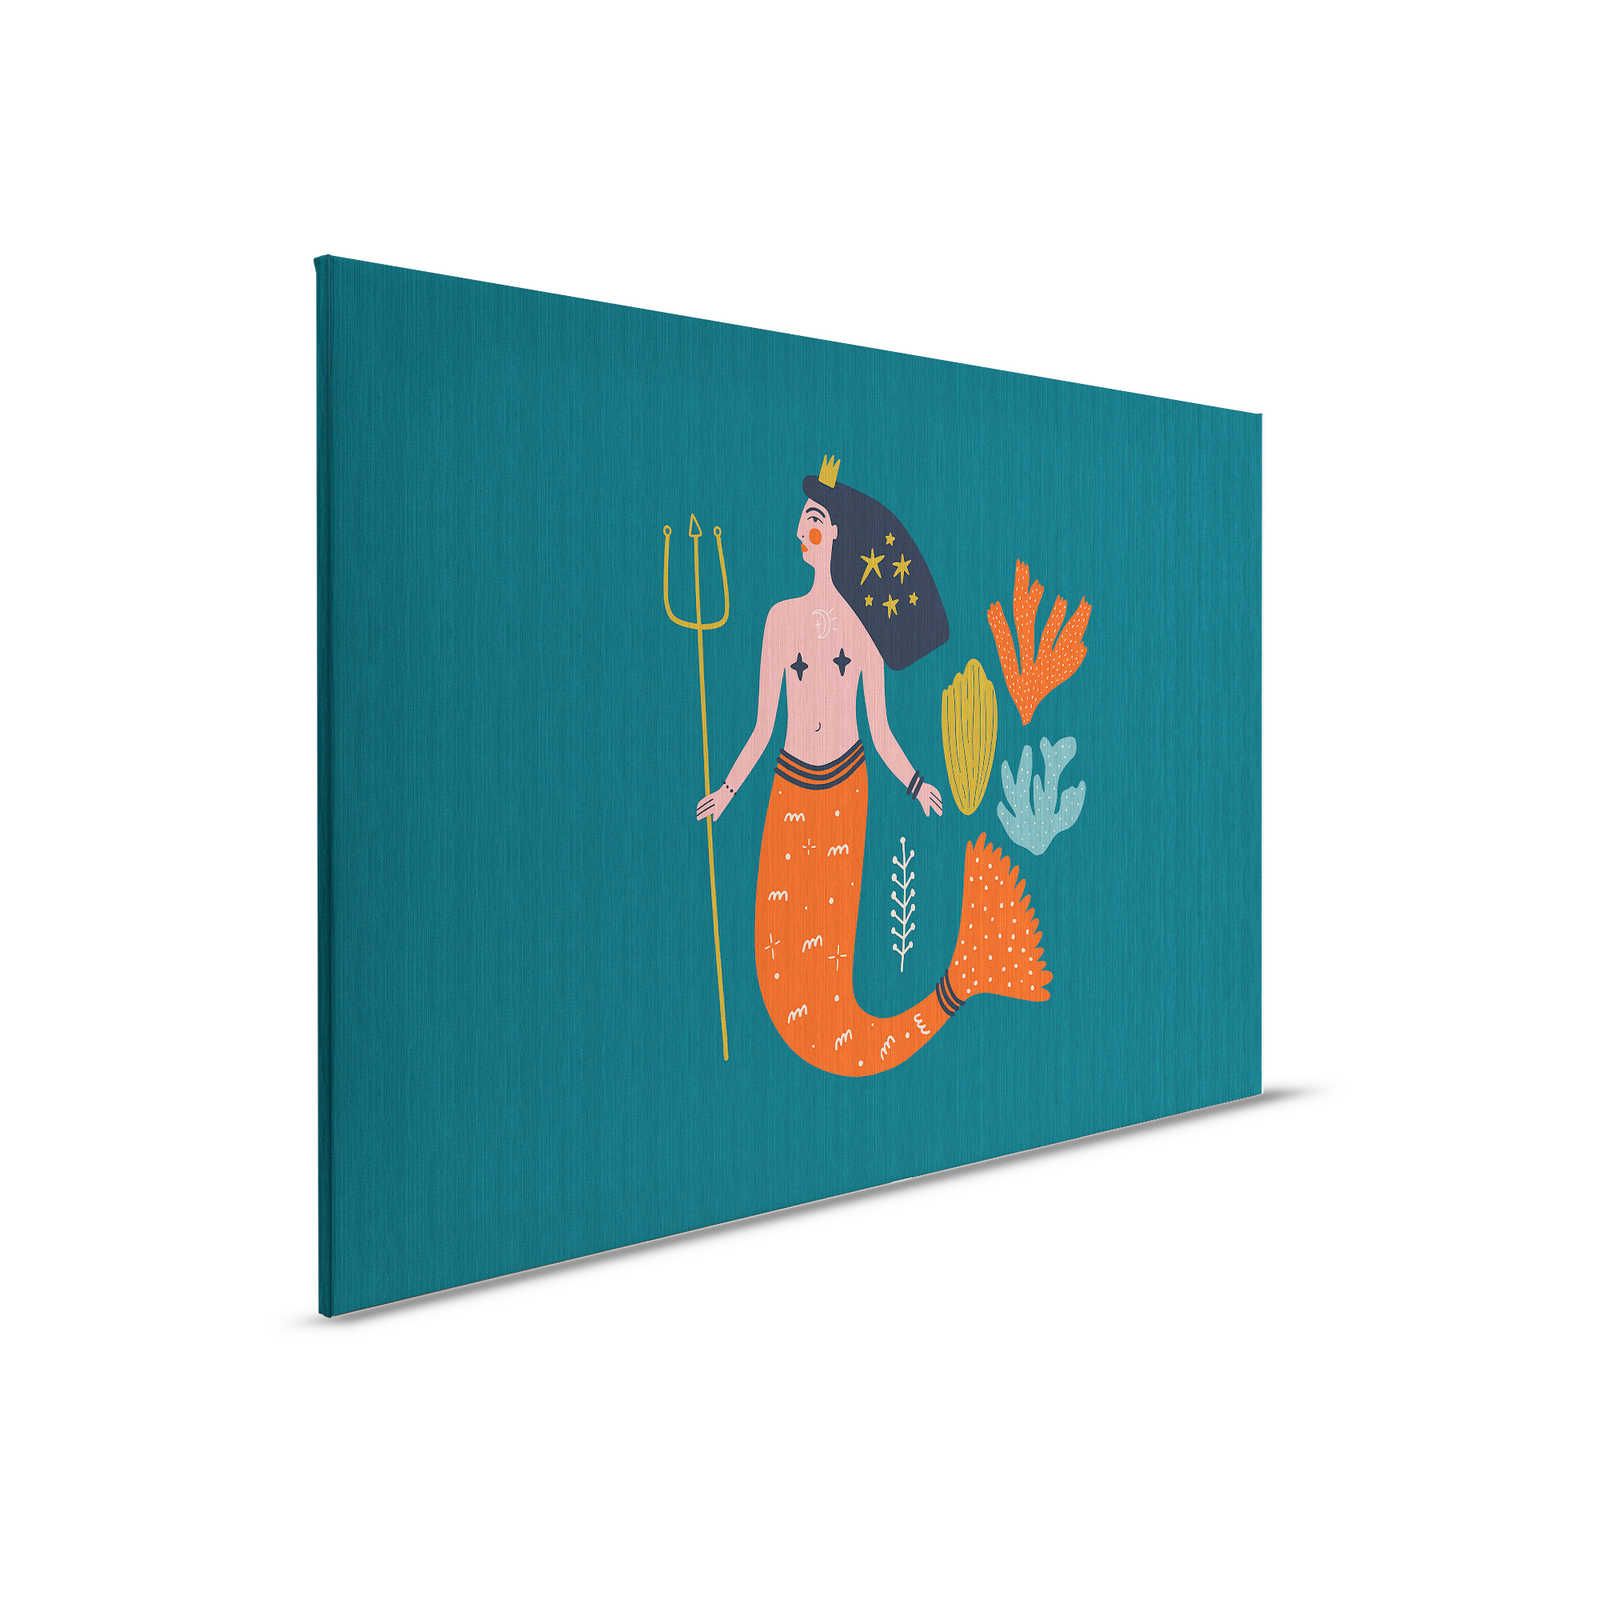         Down Under 2 - Petrol Canvas painting Mermaid Comic Style - 0.90 m x 0.60 m
    